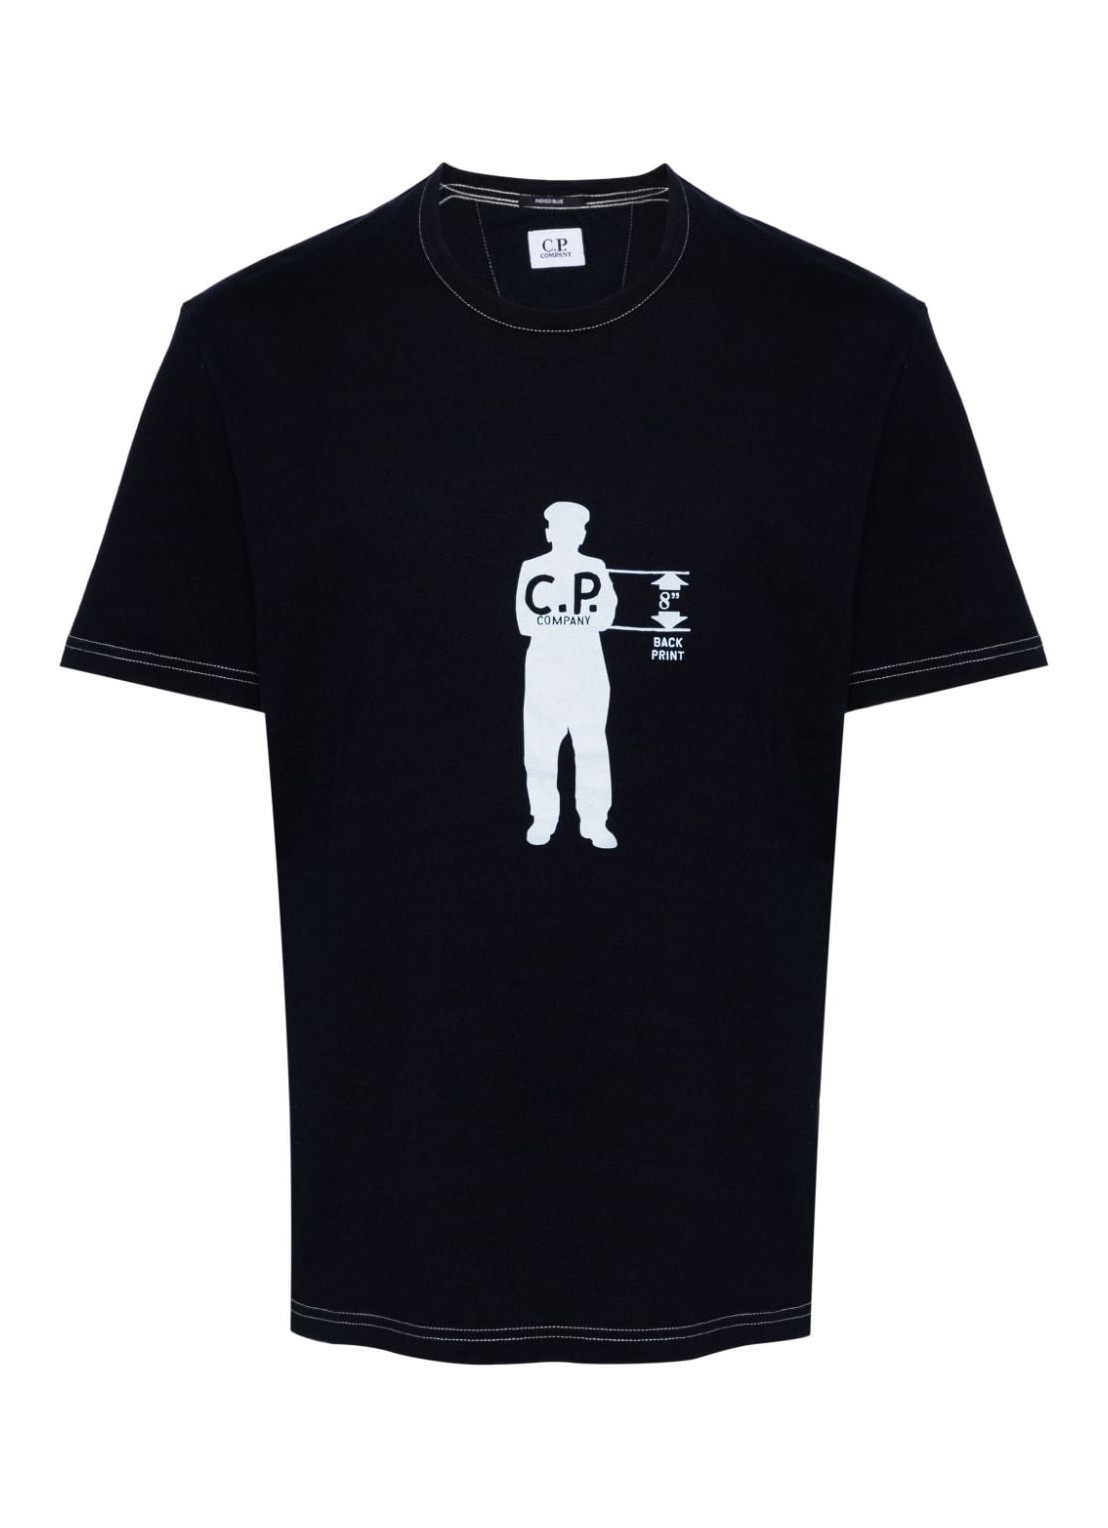 Camiseta c.p.company t-shirt manindigo jersey t-shirt - 16cmts171a110056w d08 talla gris
 